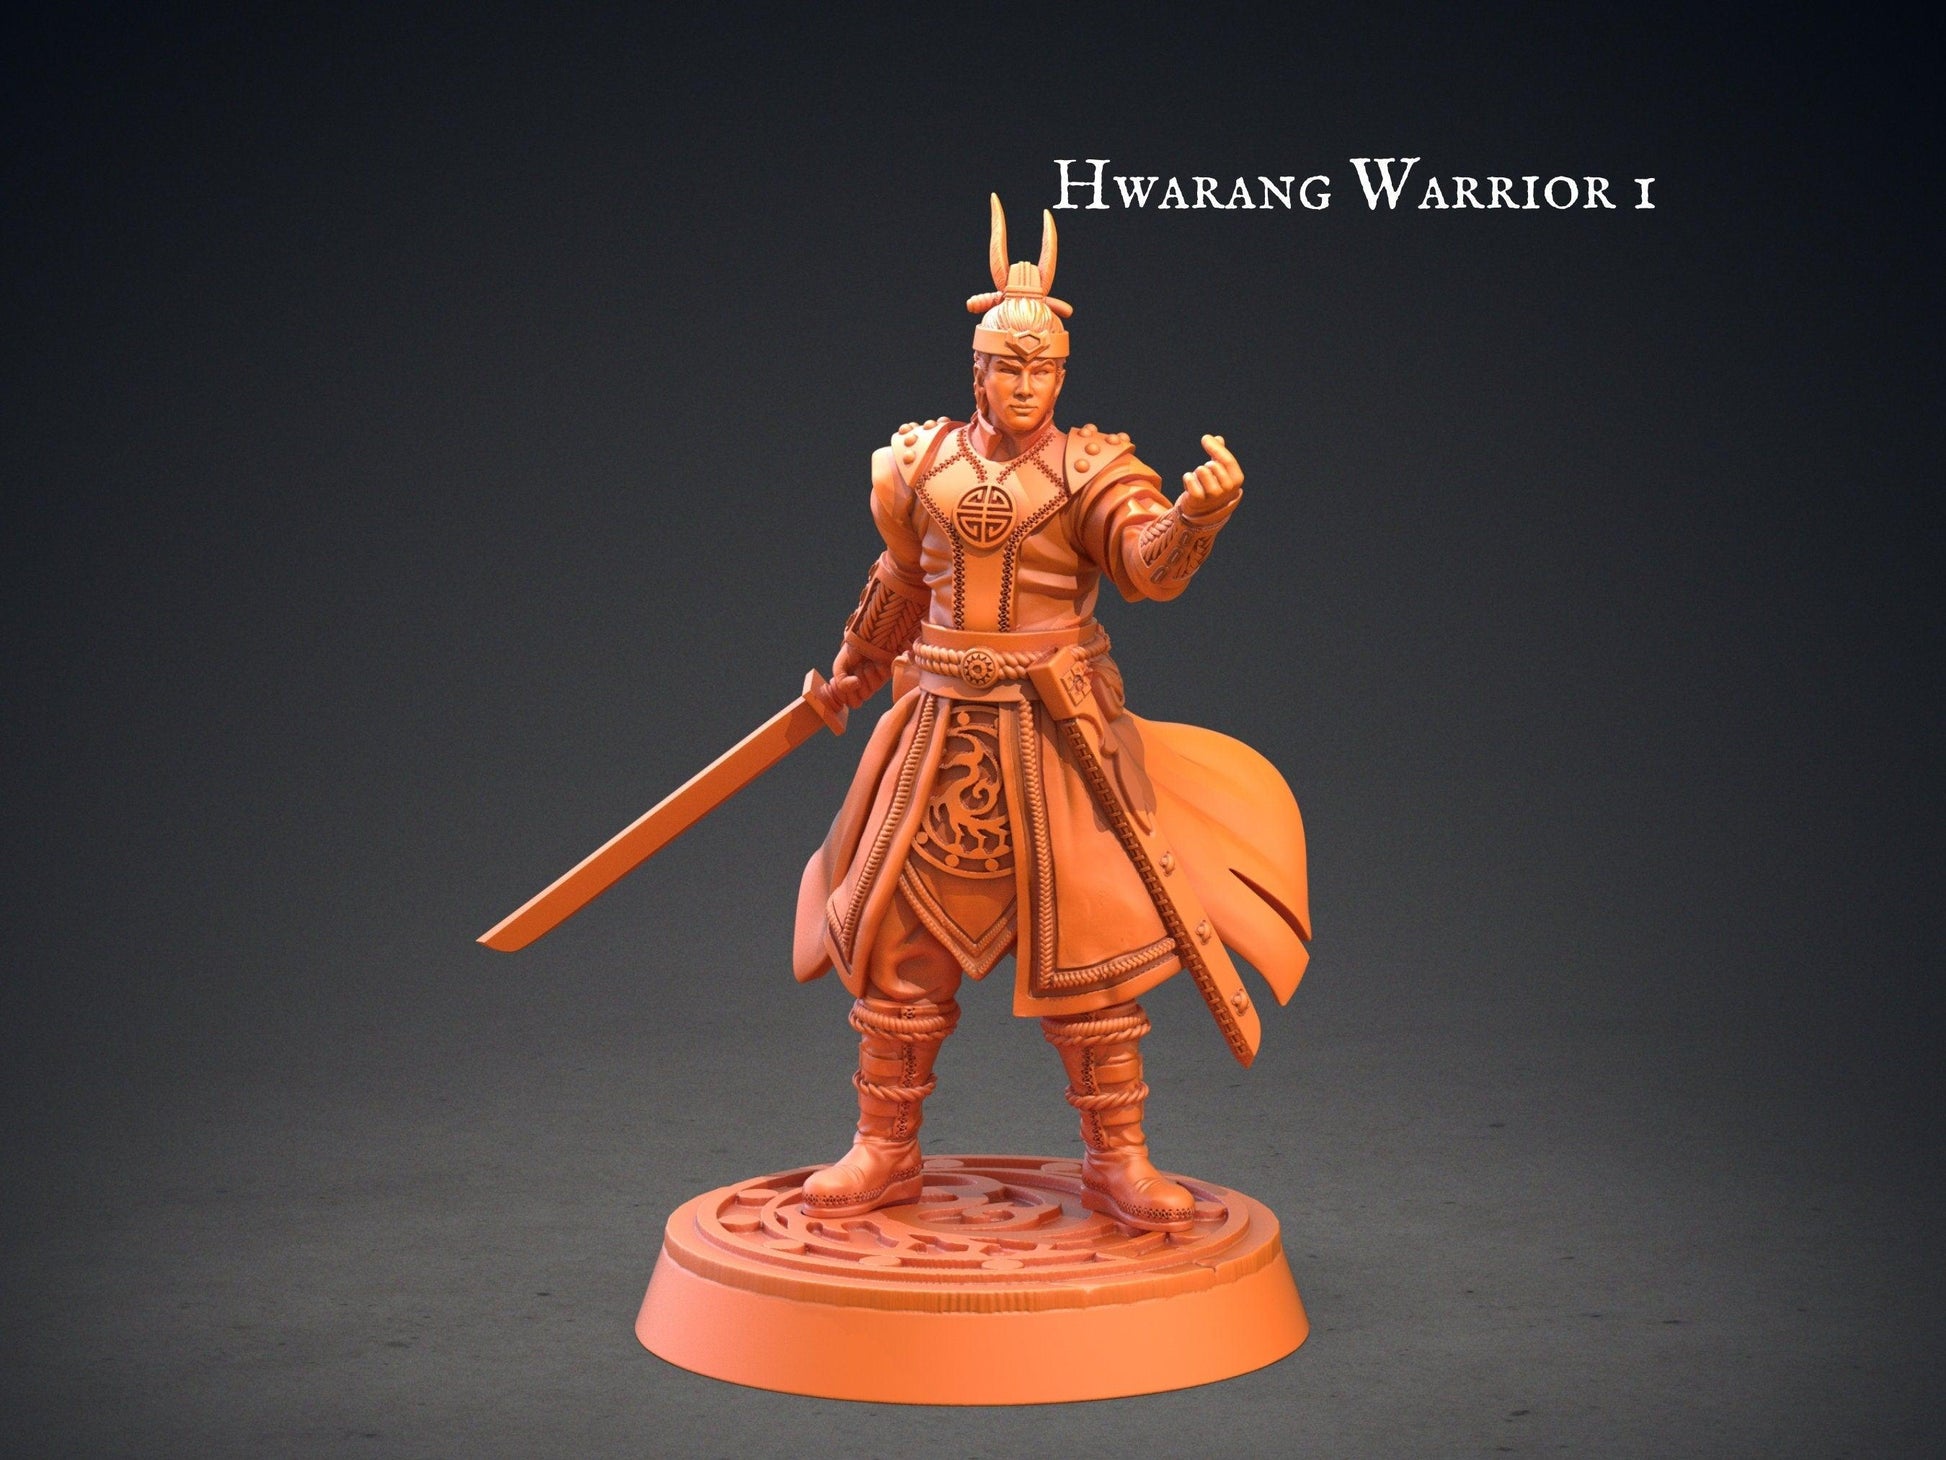 DnD Hwarang Warrior miniature | Clay Cyanide | Korean Mythology | Tabletop Gaming | DnD Miniature | Dungeons and Dragons | Korean Warriors mini - Plague Miniatures shop for DnD Miniatures